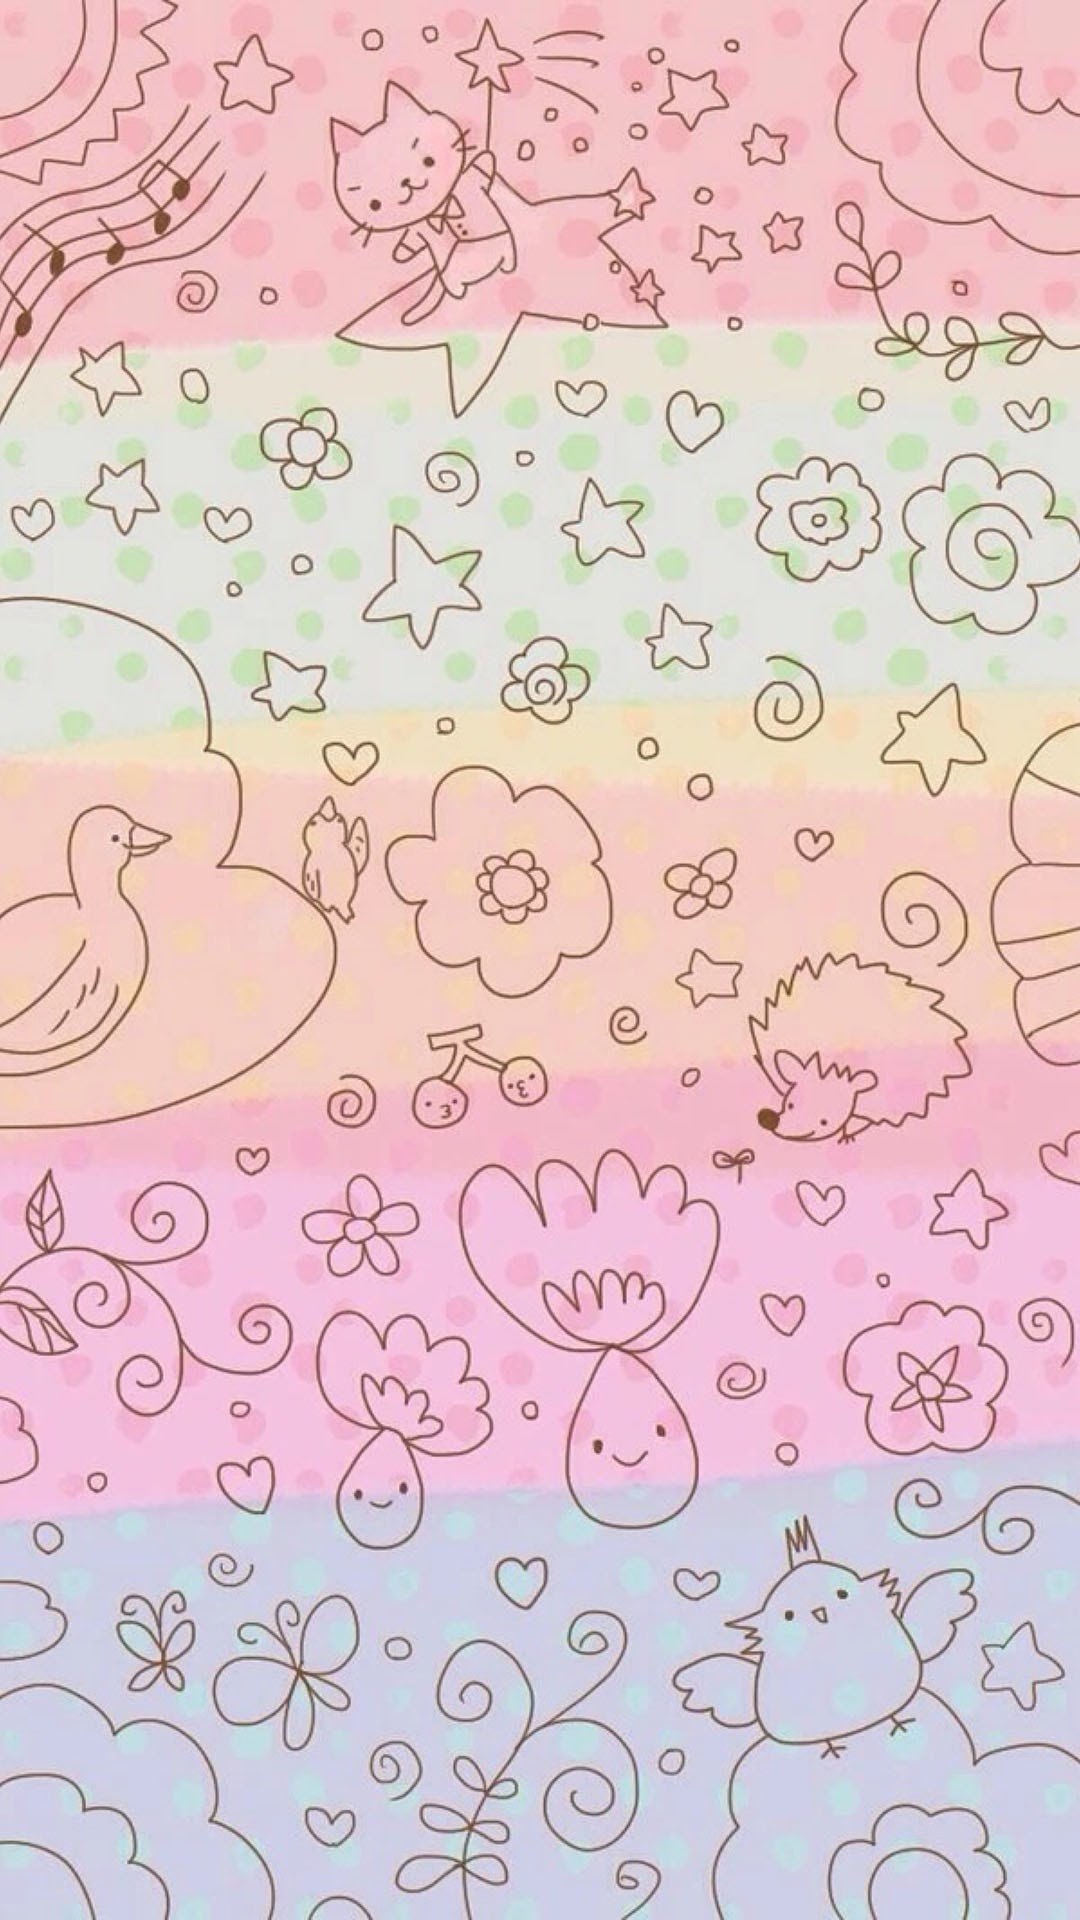 Cute Pink Backgrounds Pinterest - Cute Pinterest Wallpapers (50+ images